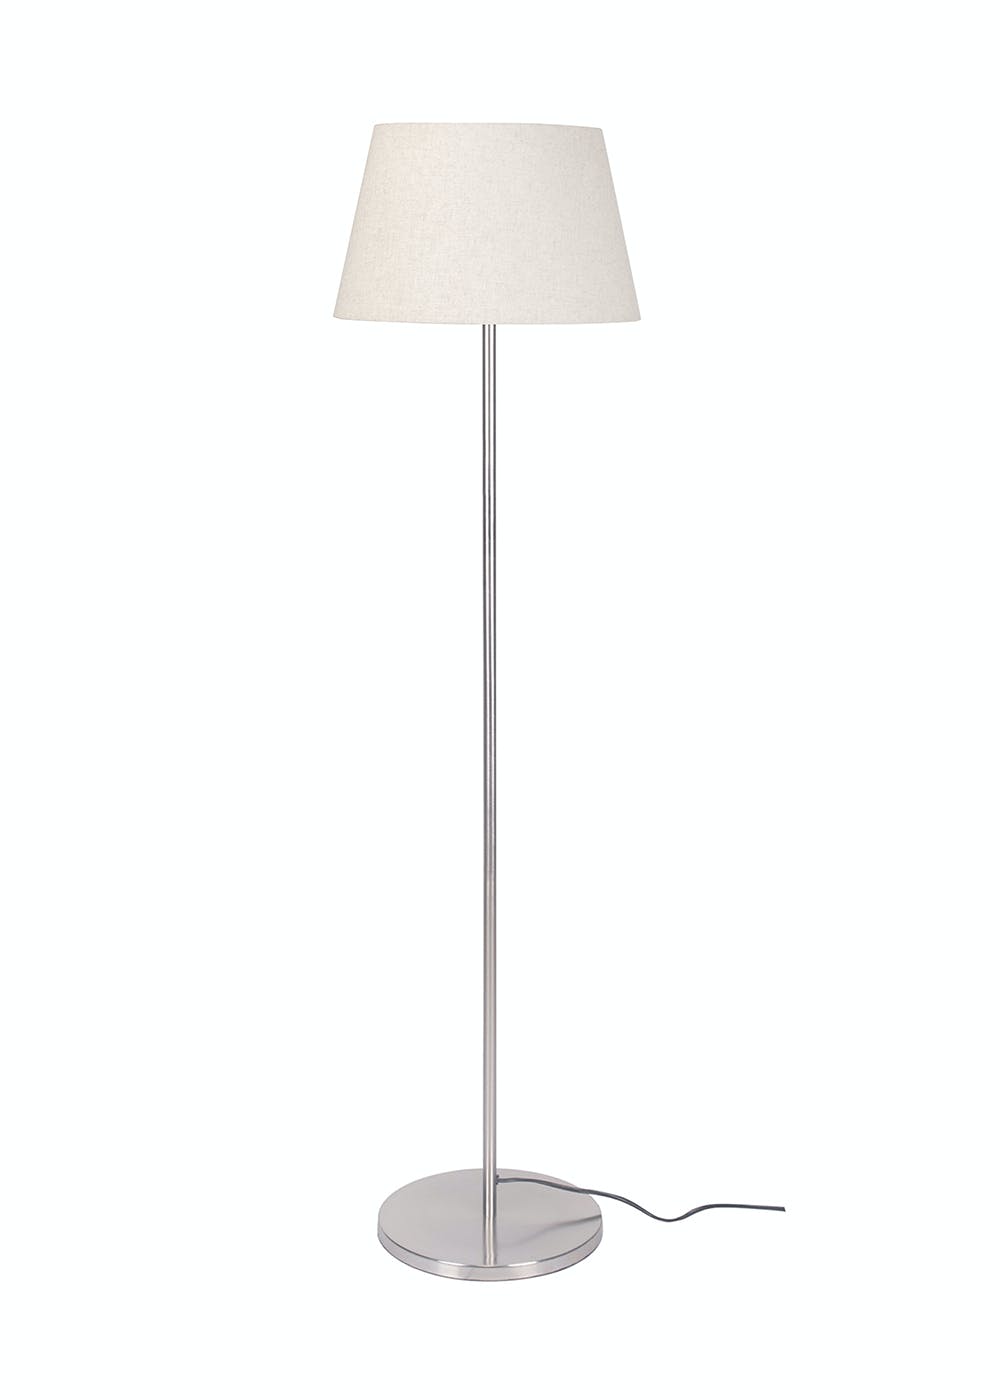 Get Modern Stainless Steel Finish Sleek Floor Lamp Standing White Lamp  Shade at ₹ 3475 | LBB Shop